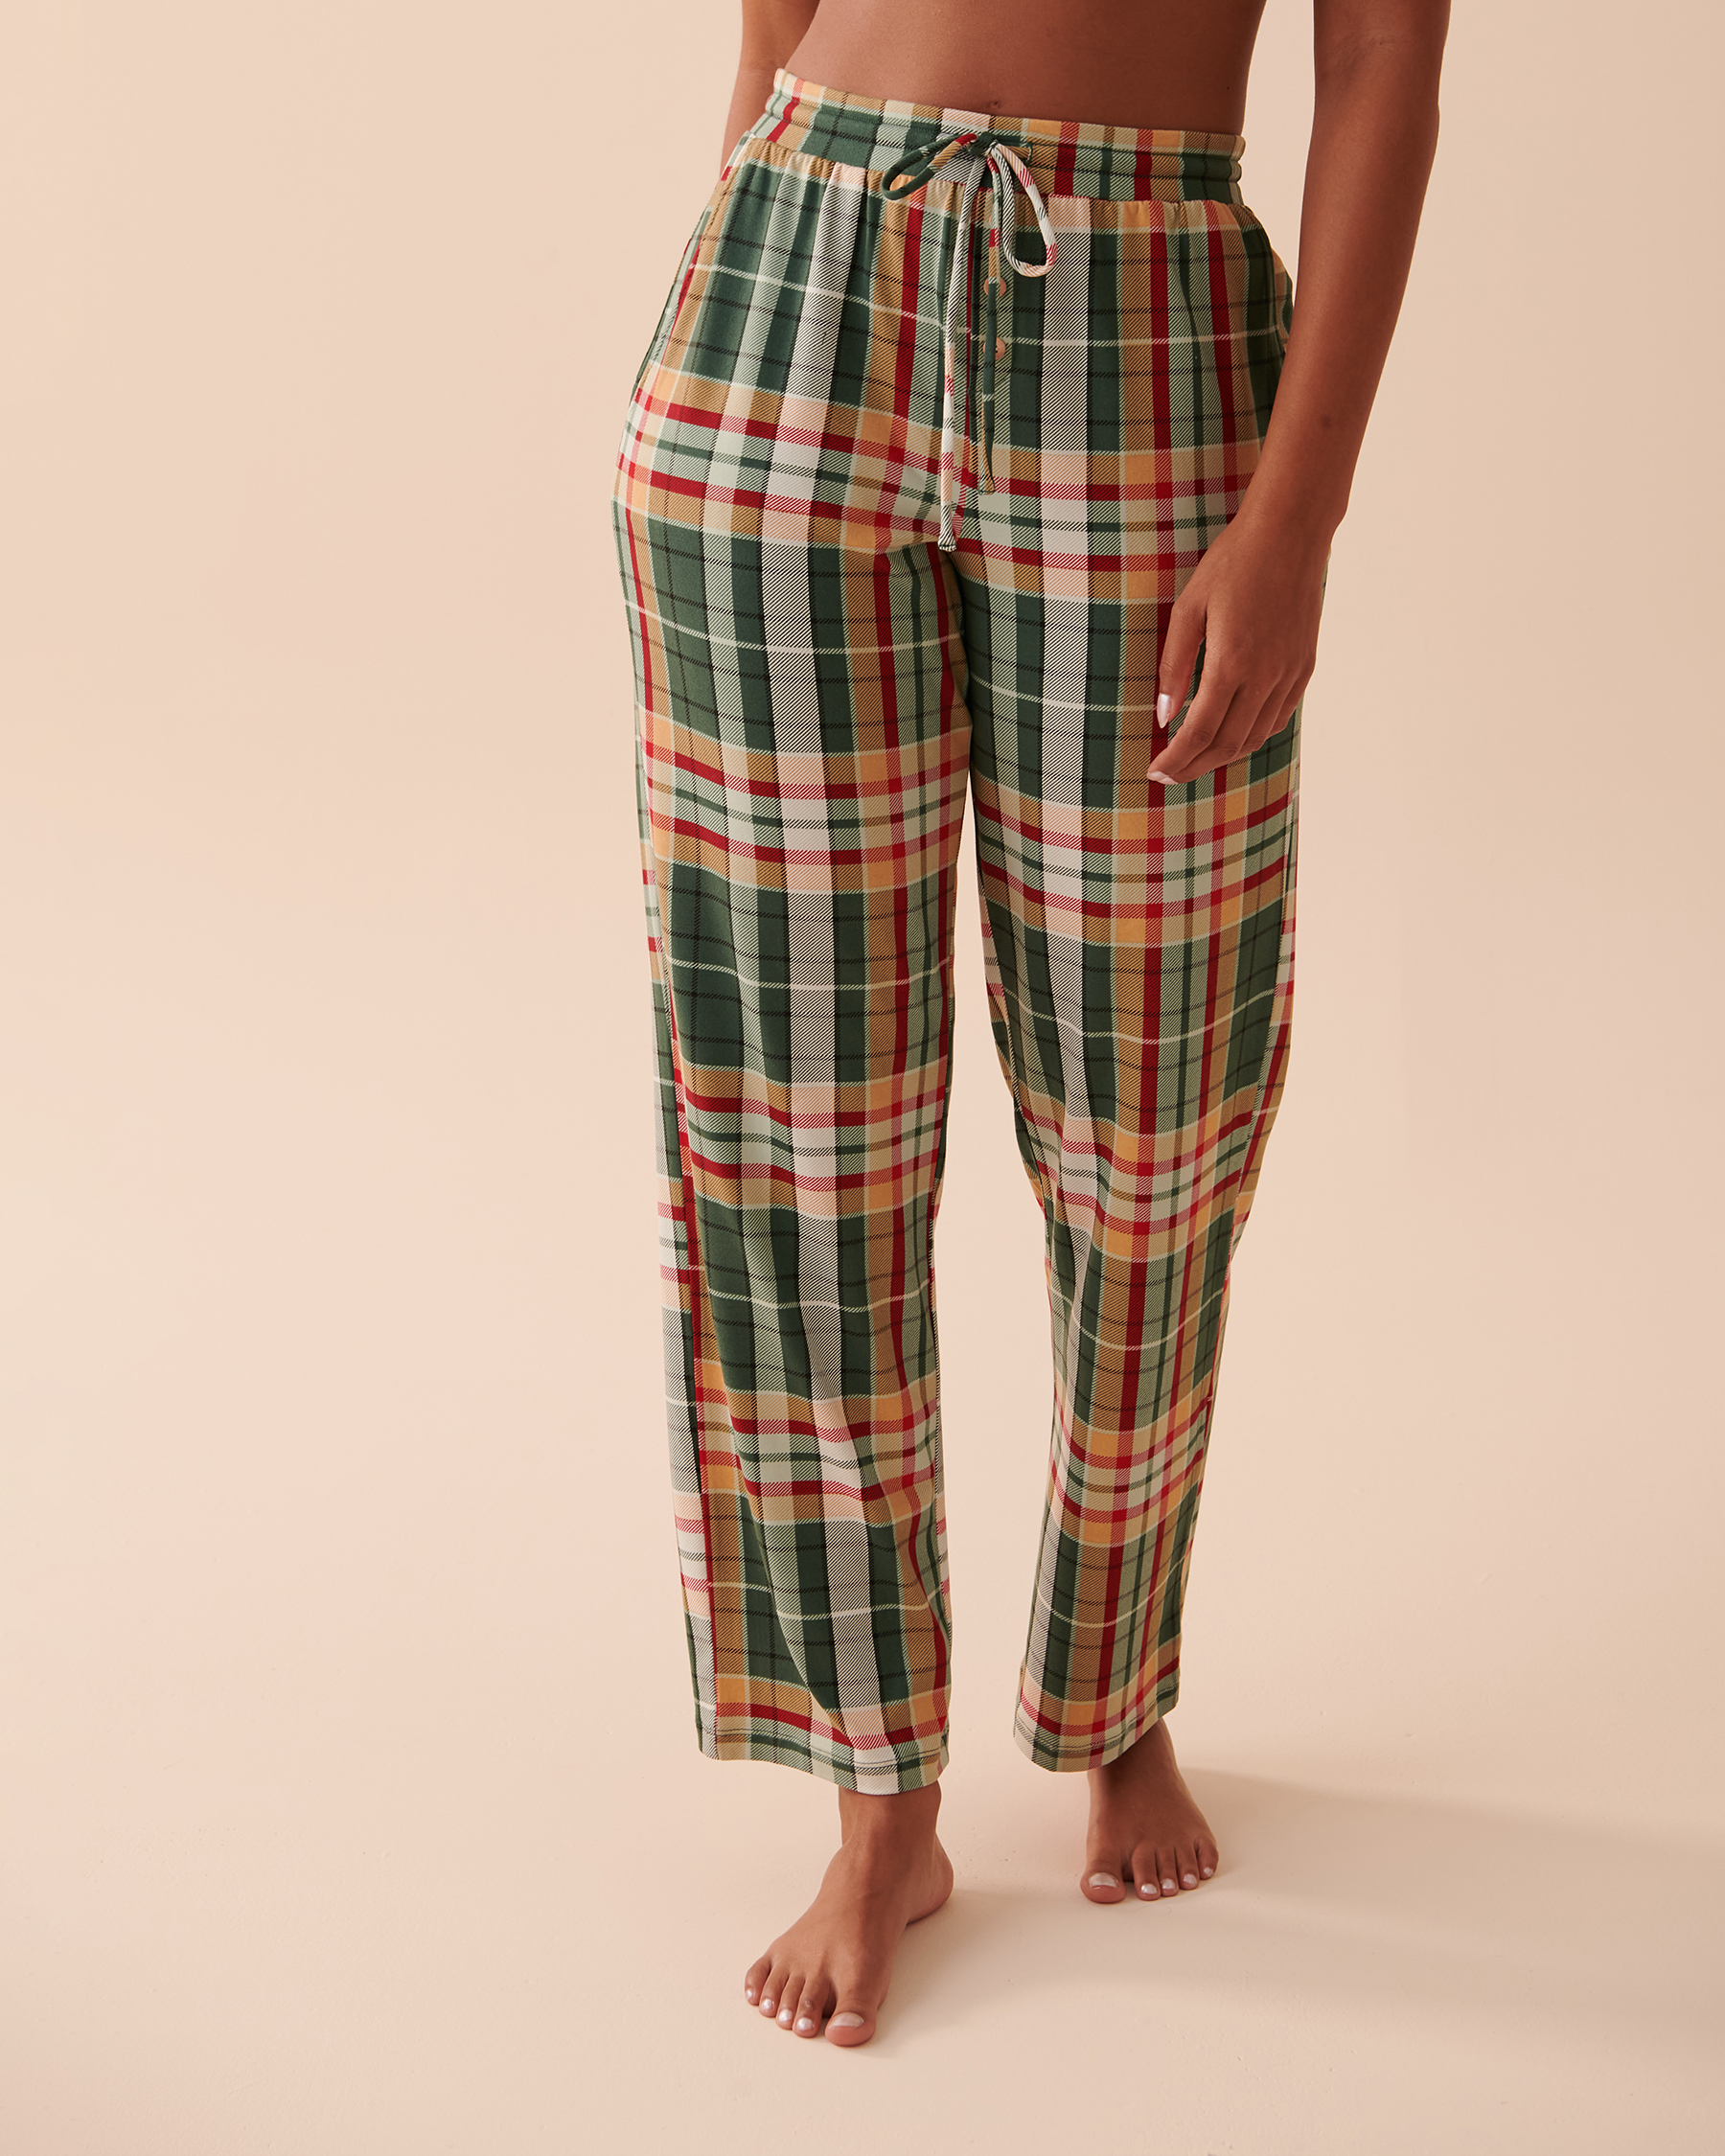 Super Soft Plaid Pajama Pants - Green and Caramel Plaid